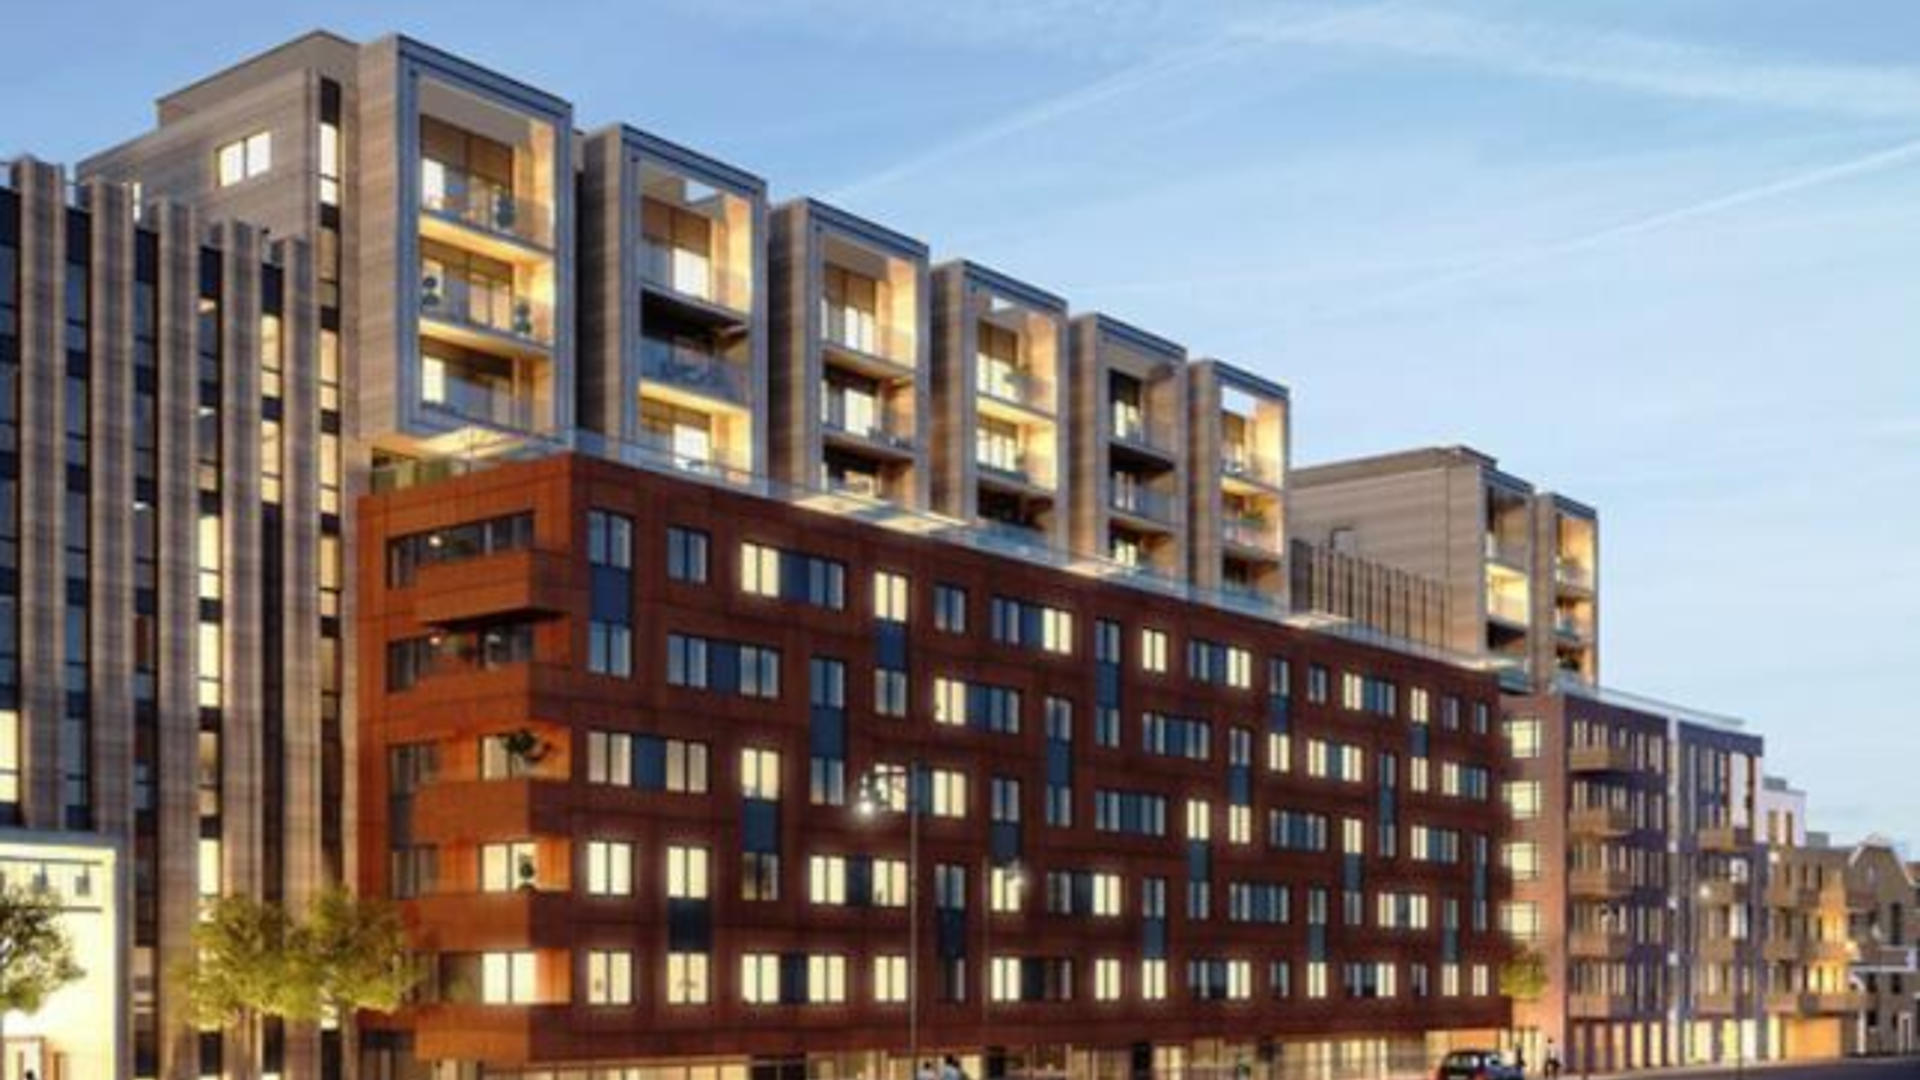 City Wharf | New rental property development